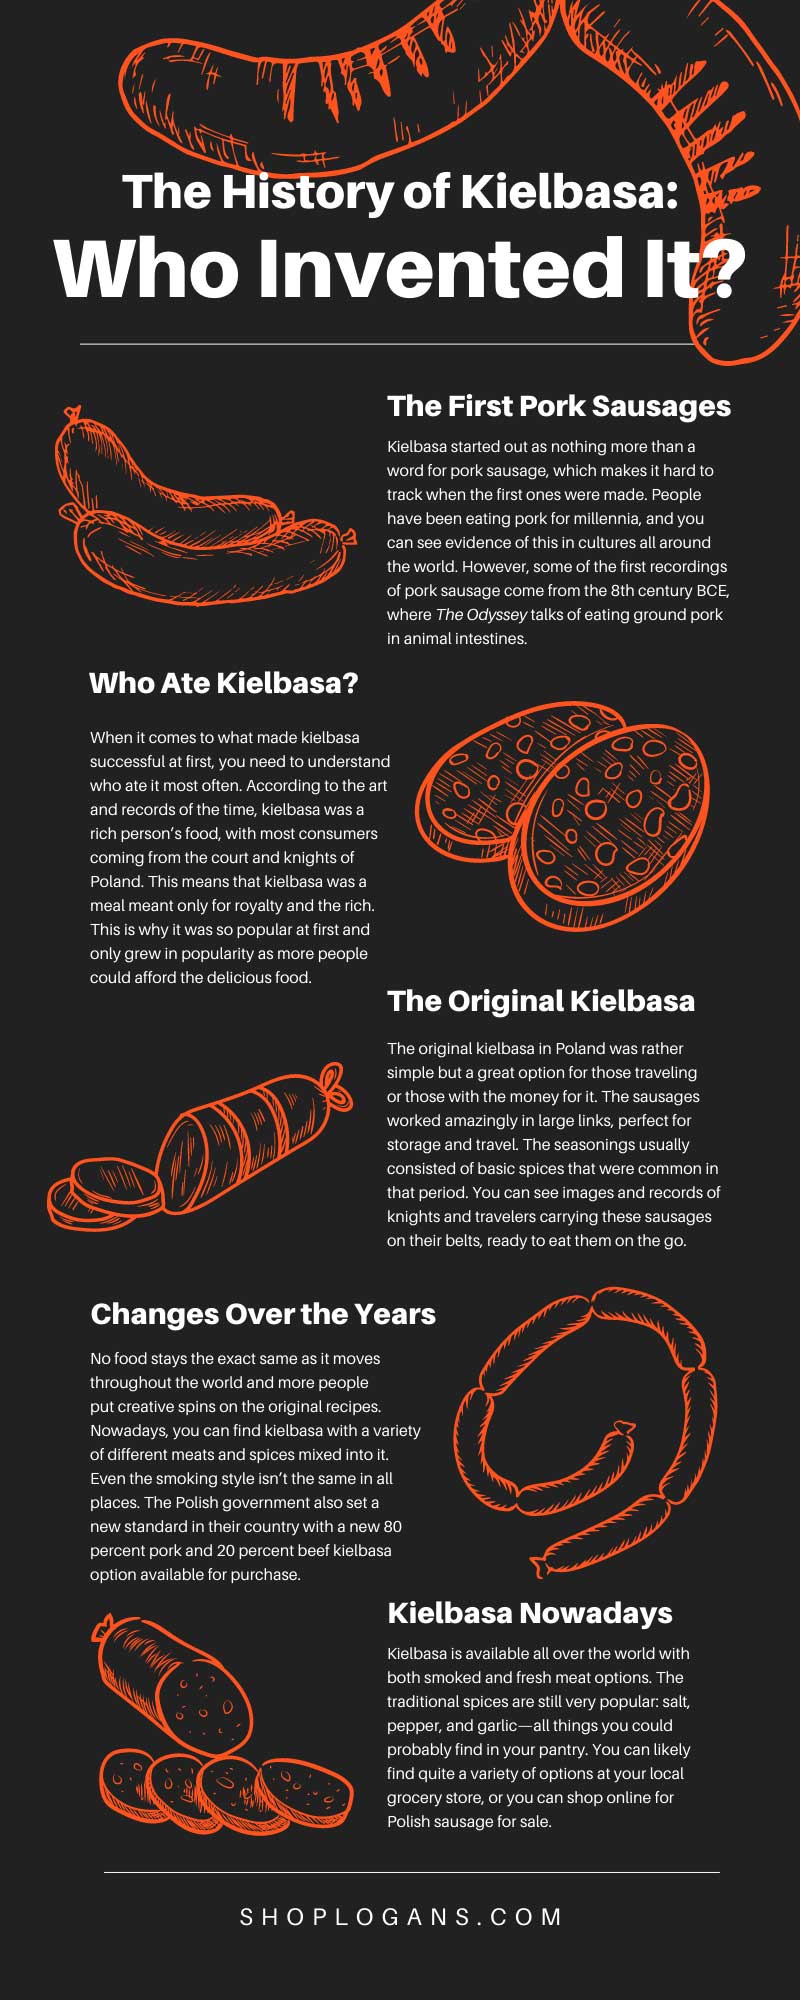 The History of Kielbasa: Who Invented It?